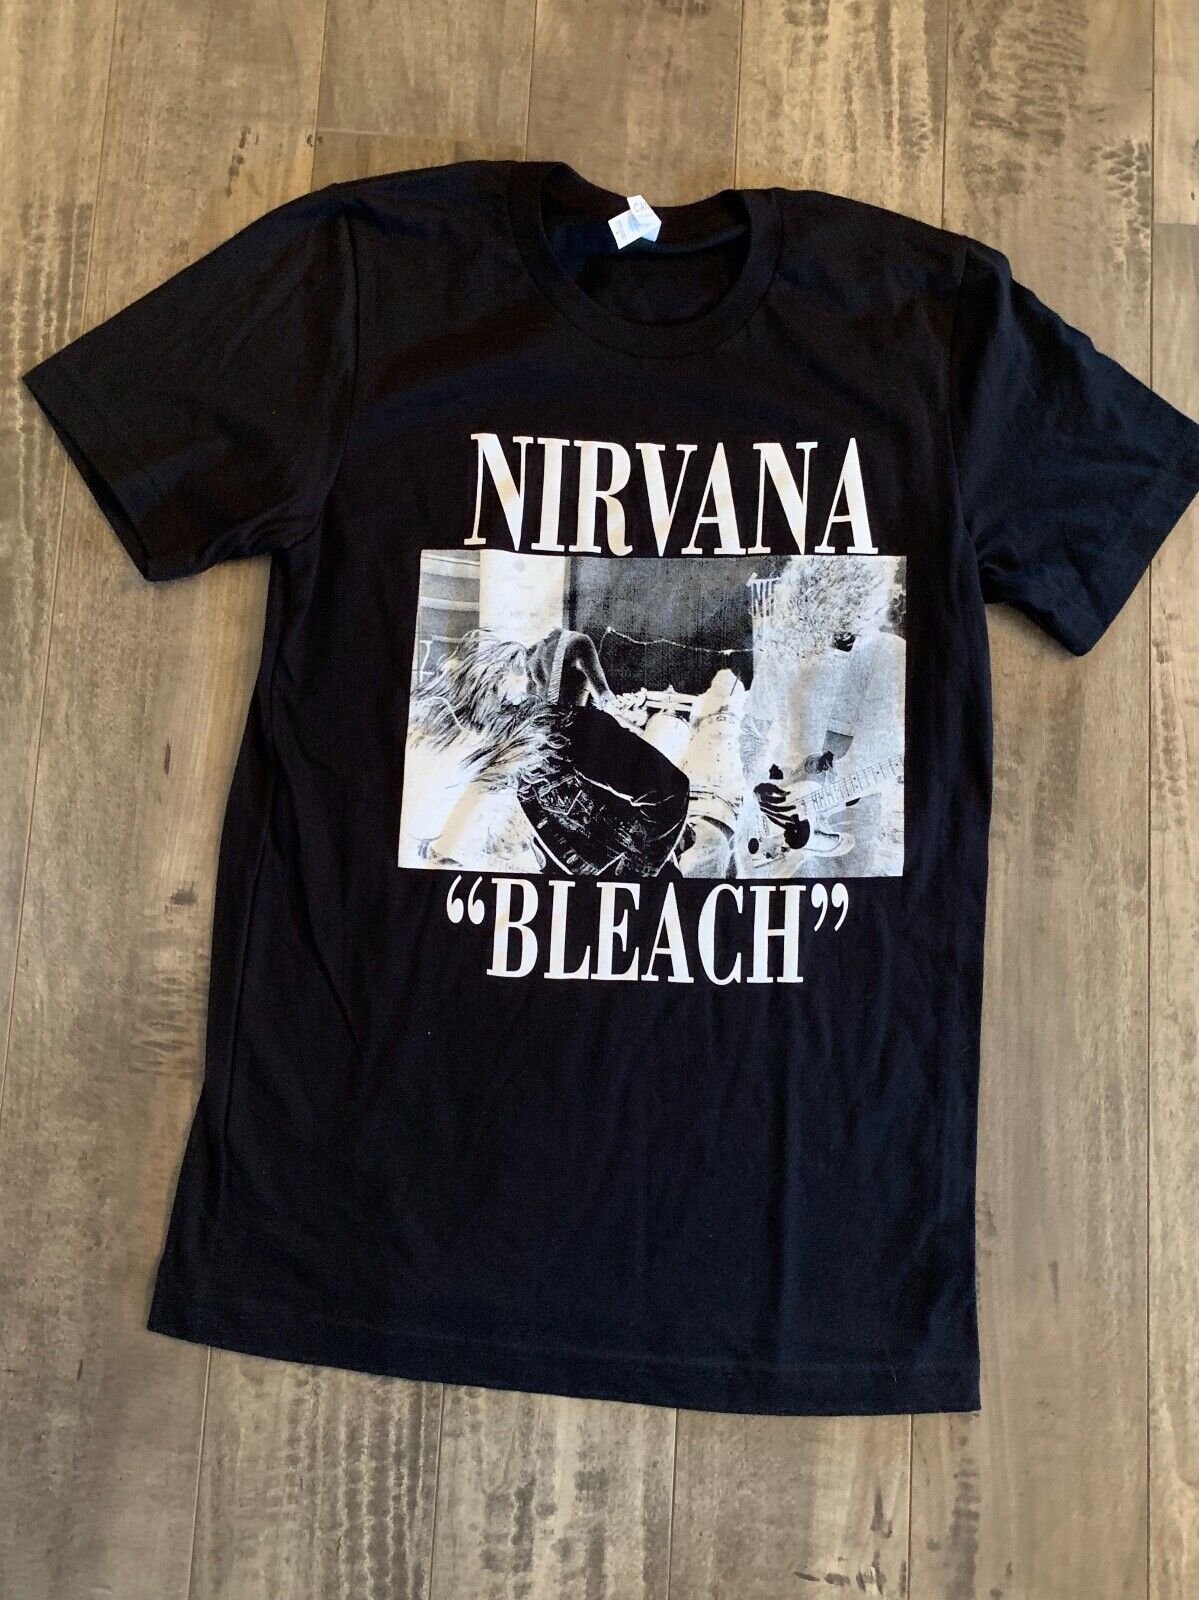 Licensed) Nirvana Bleach Shirt | eBay